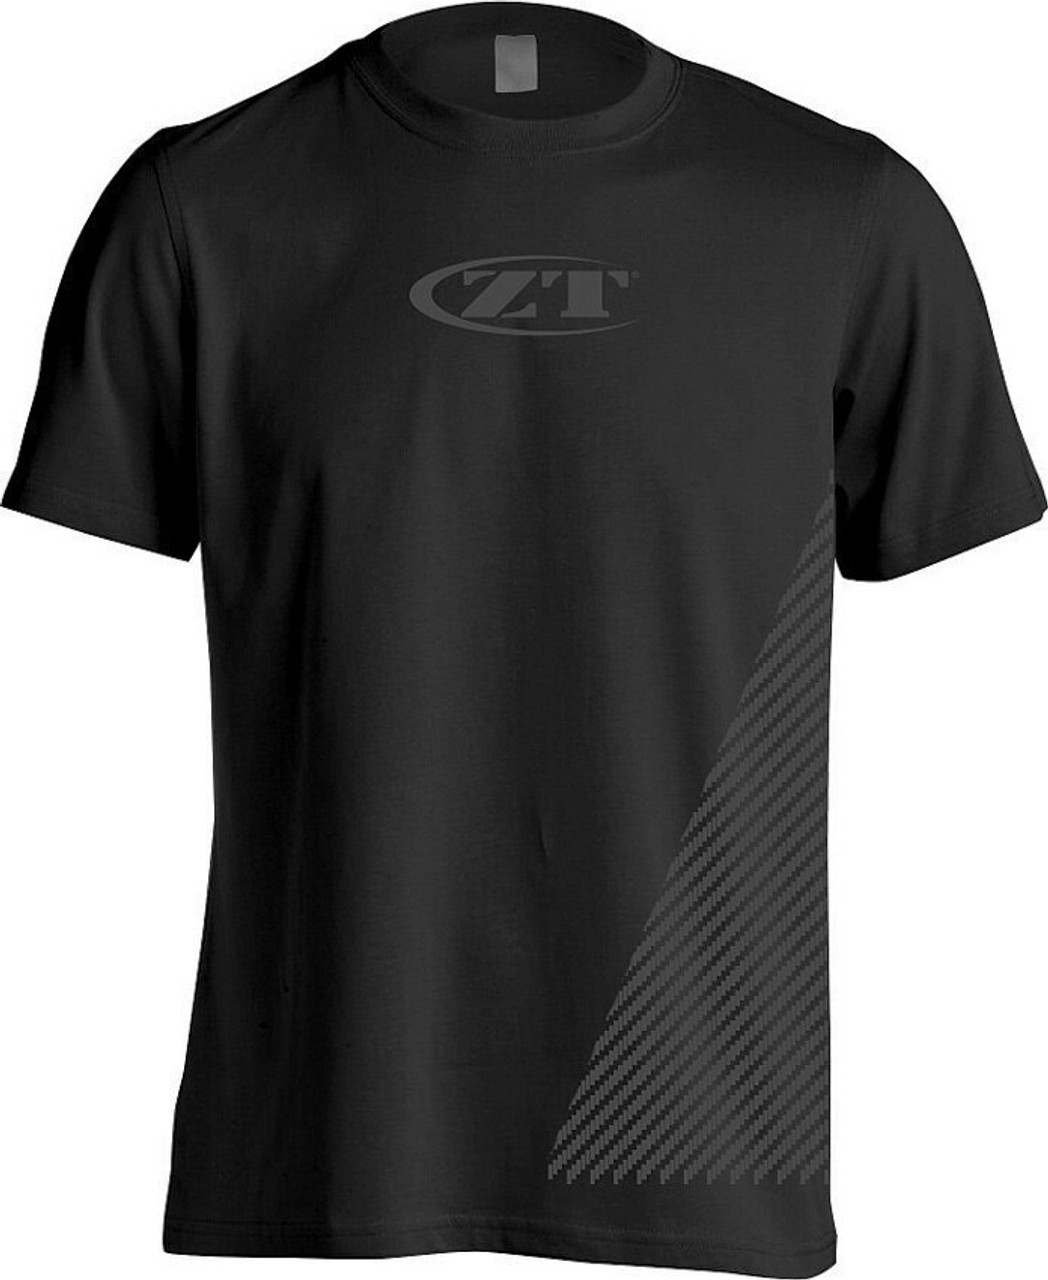 Zero Tolerance 183M Tactical T-Shirt, Black, Medium